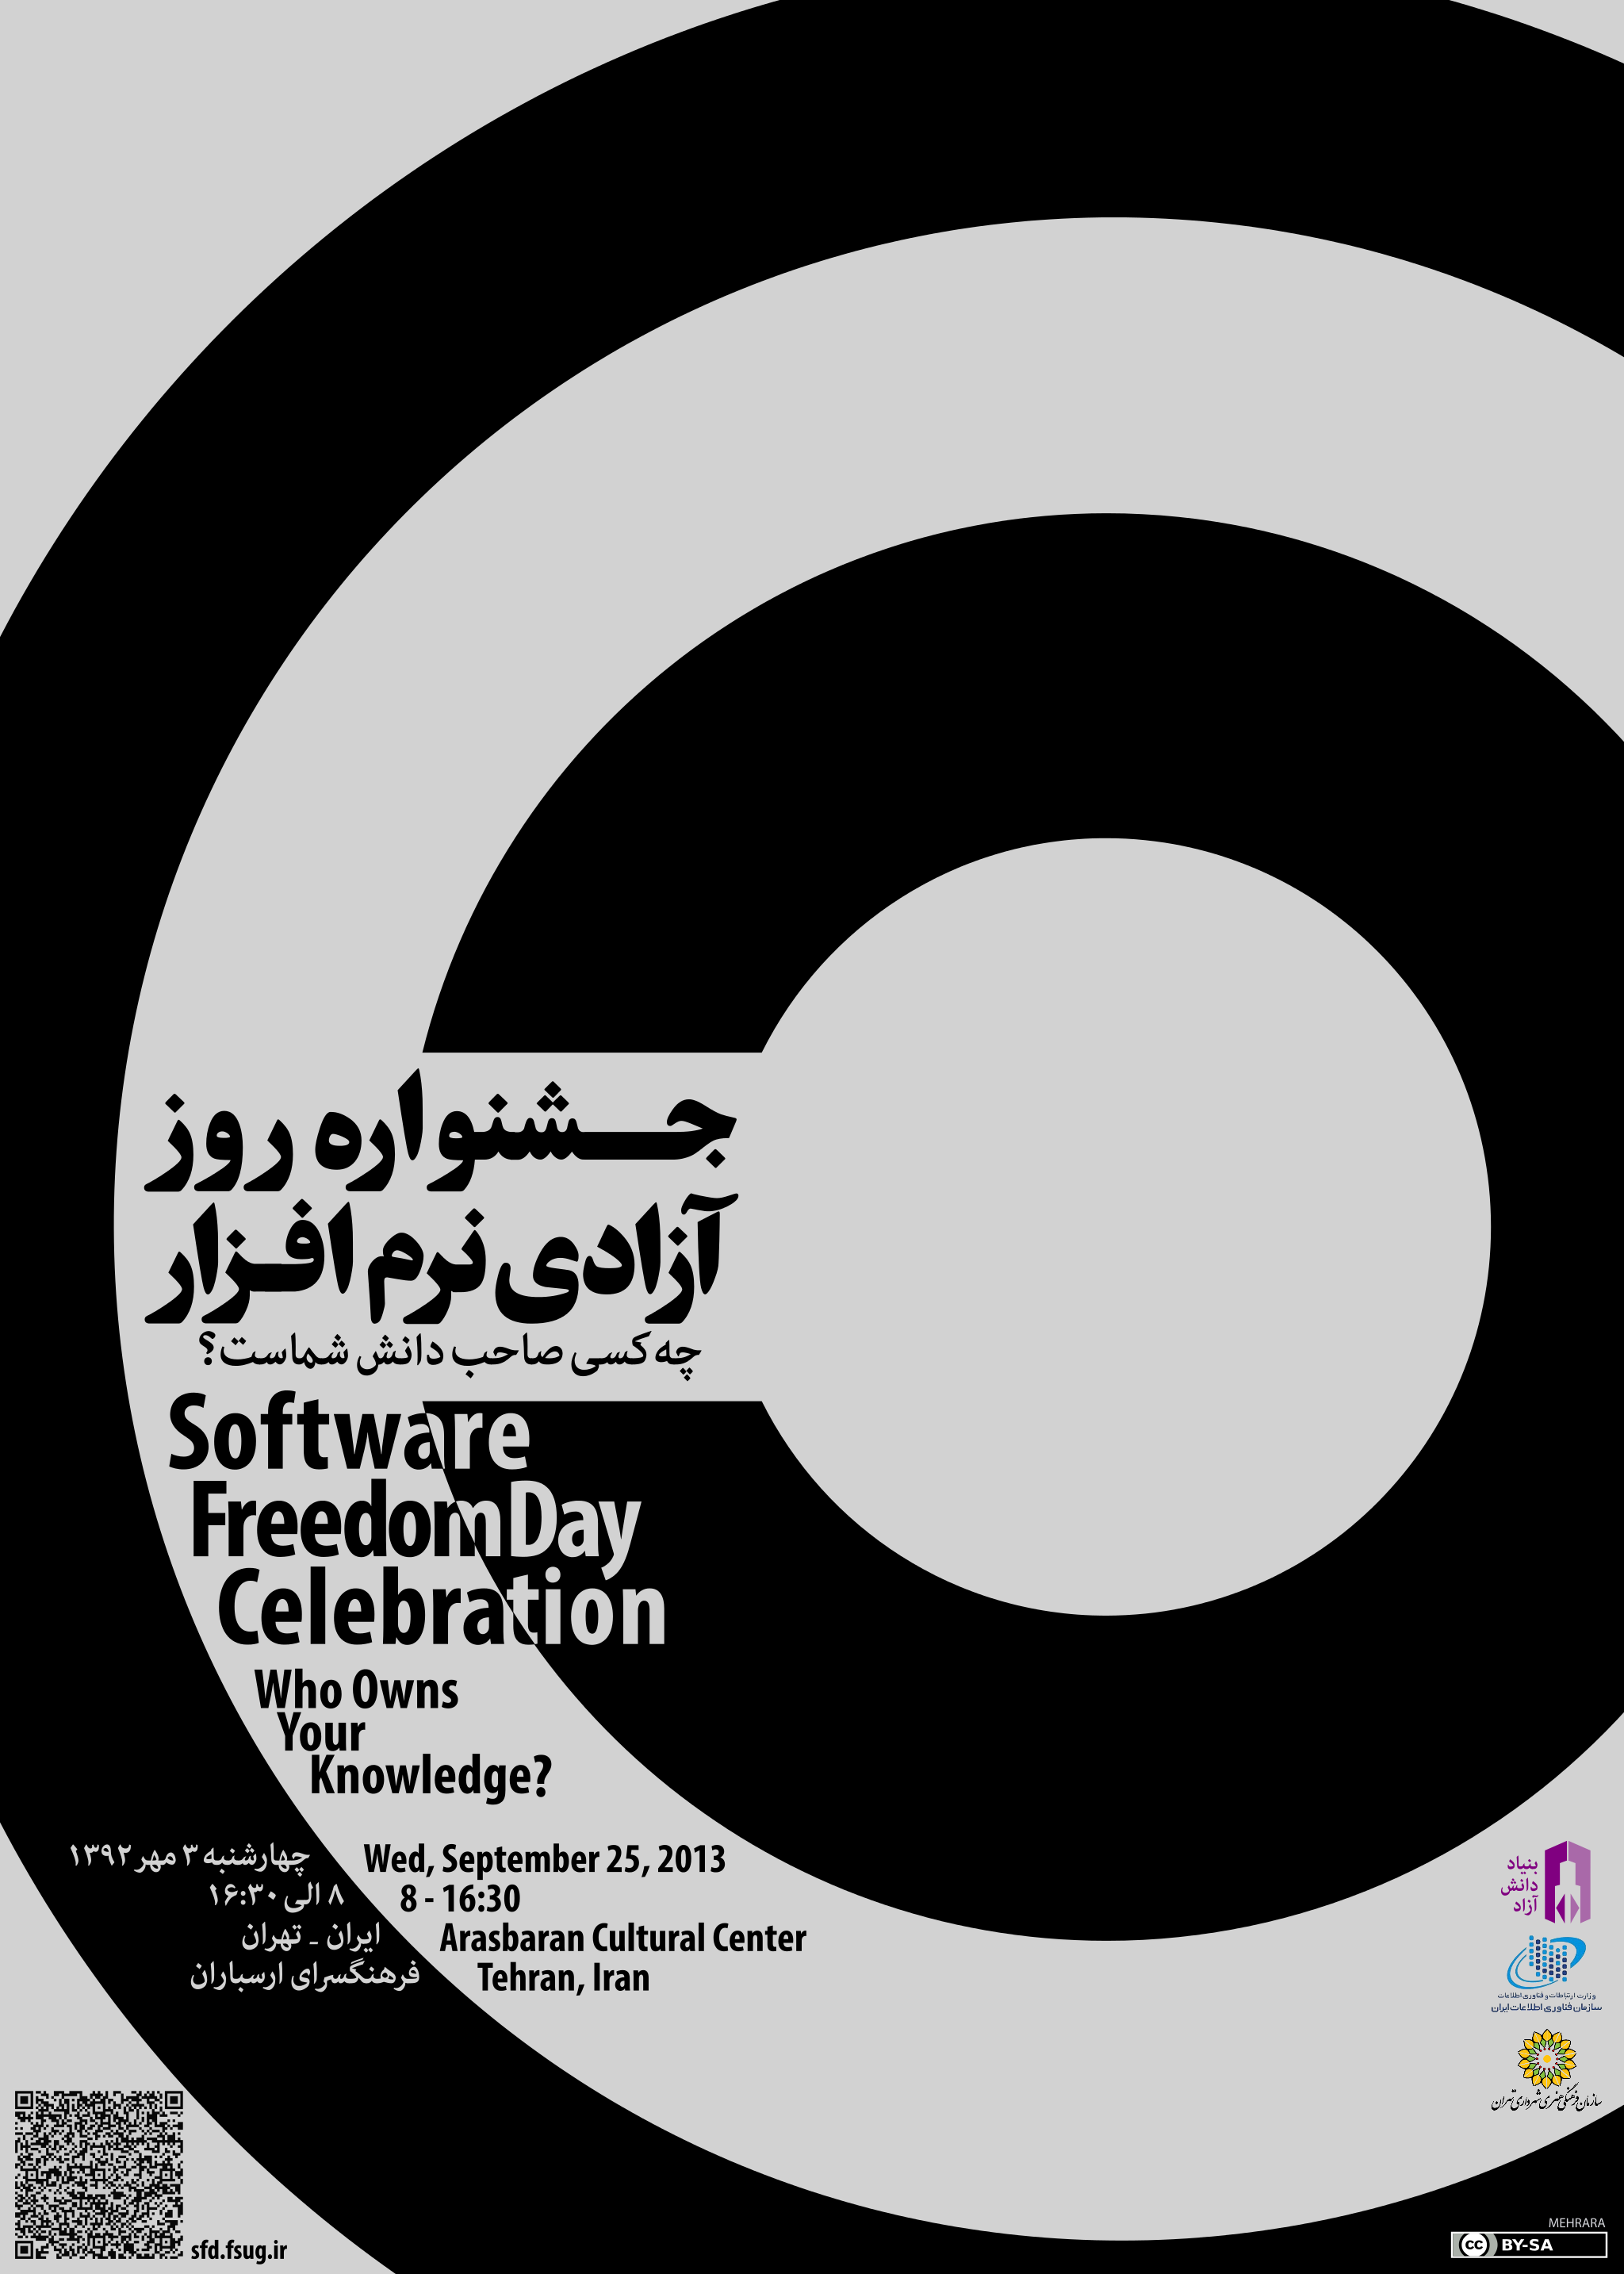 http://sfd.fsug.ir/1392/images/artworks/poster/Software_Freedom_Day_Celebration.png